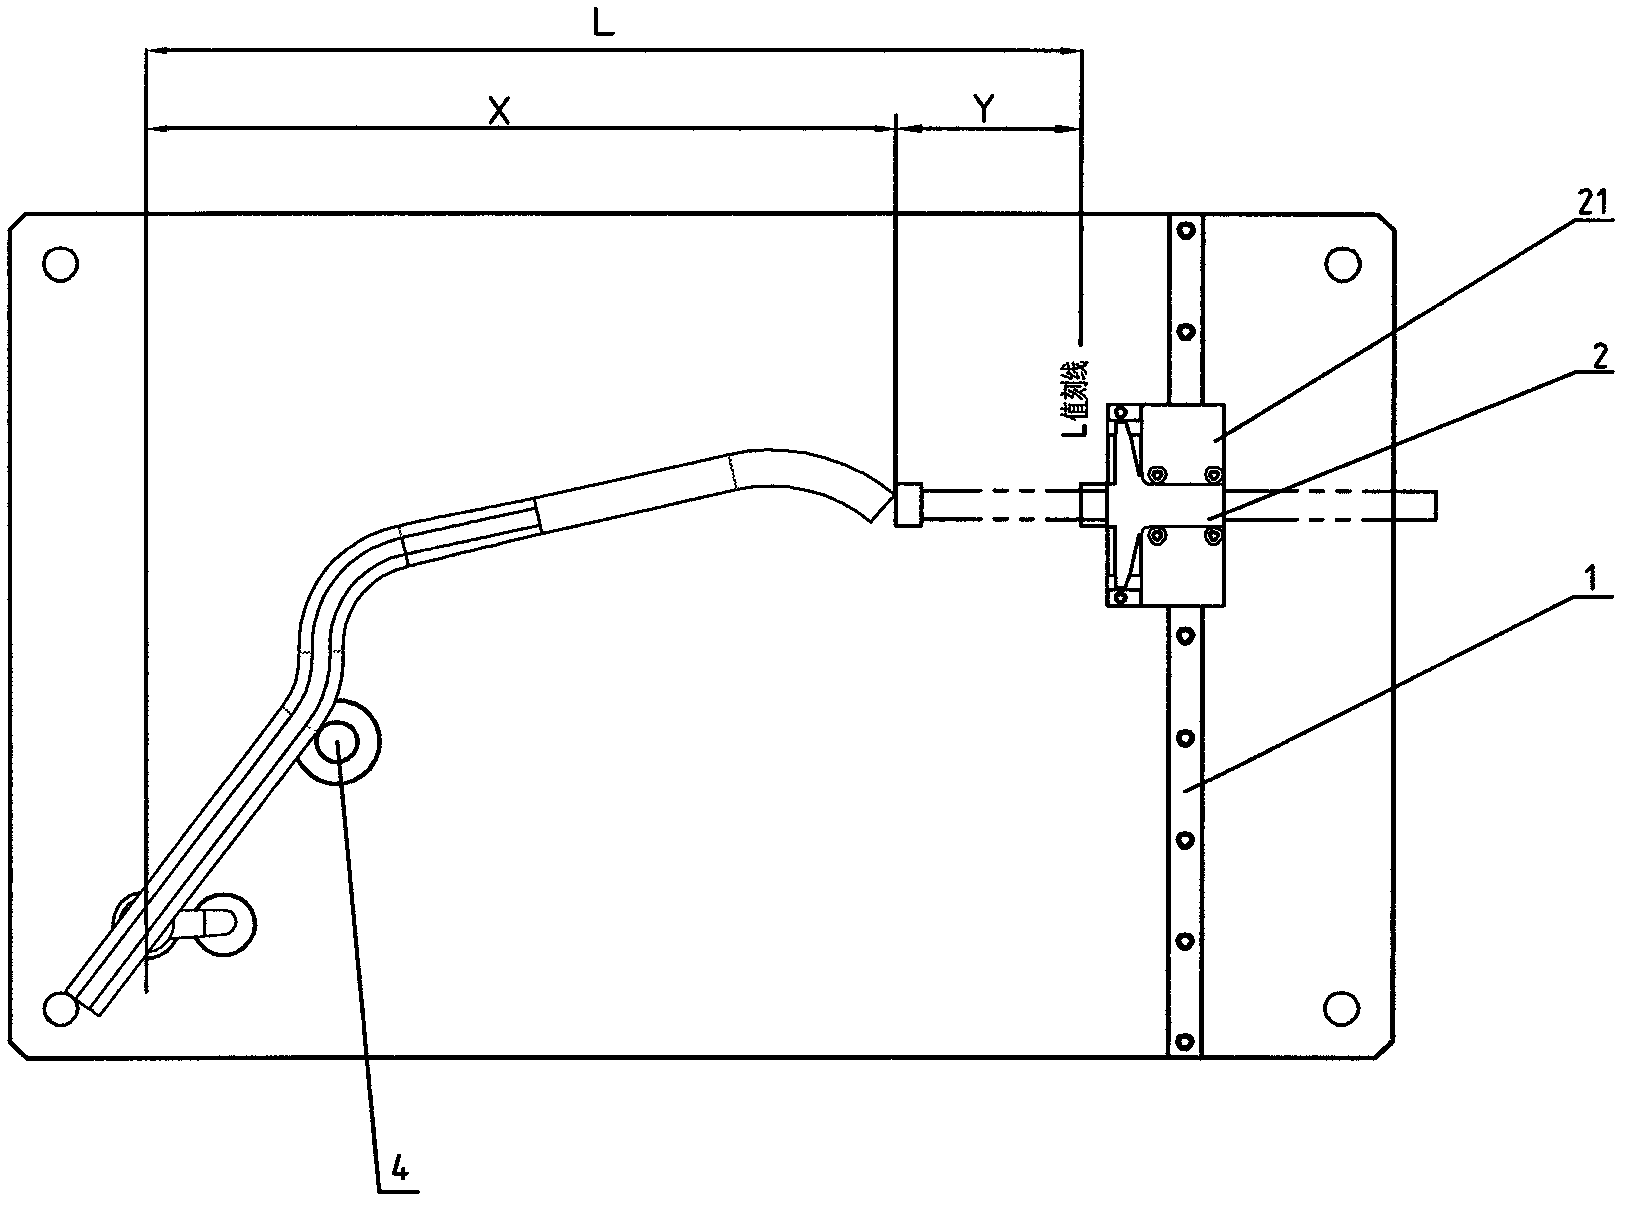 Equipment and method for measuring brake lever